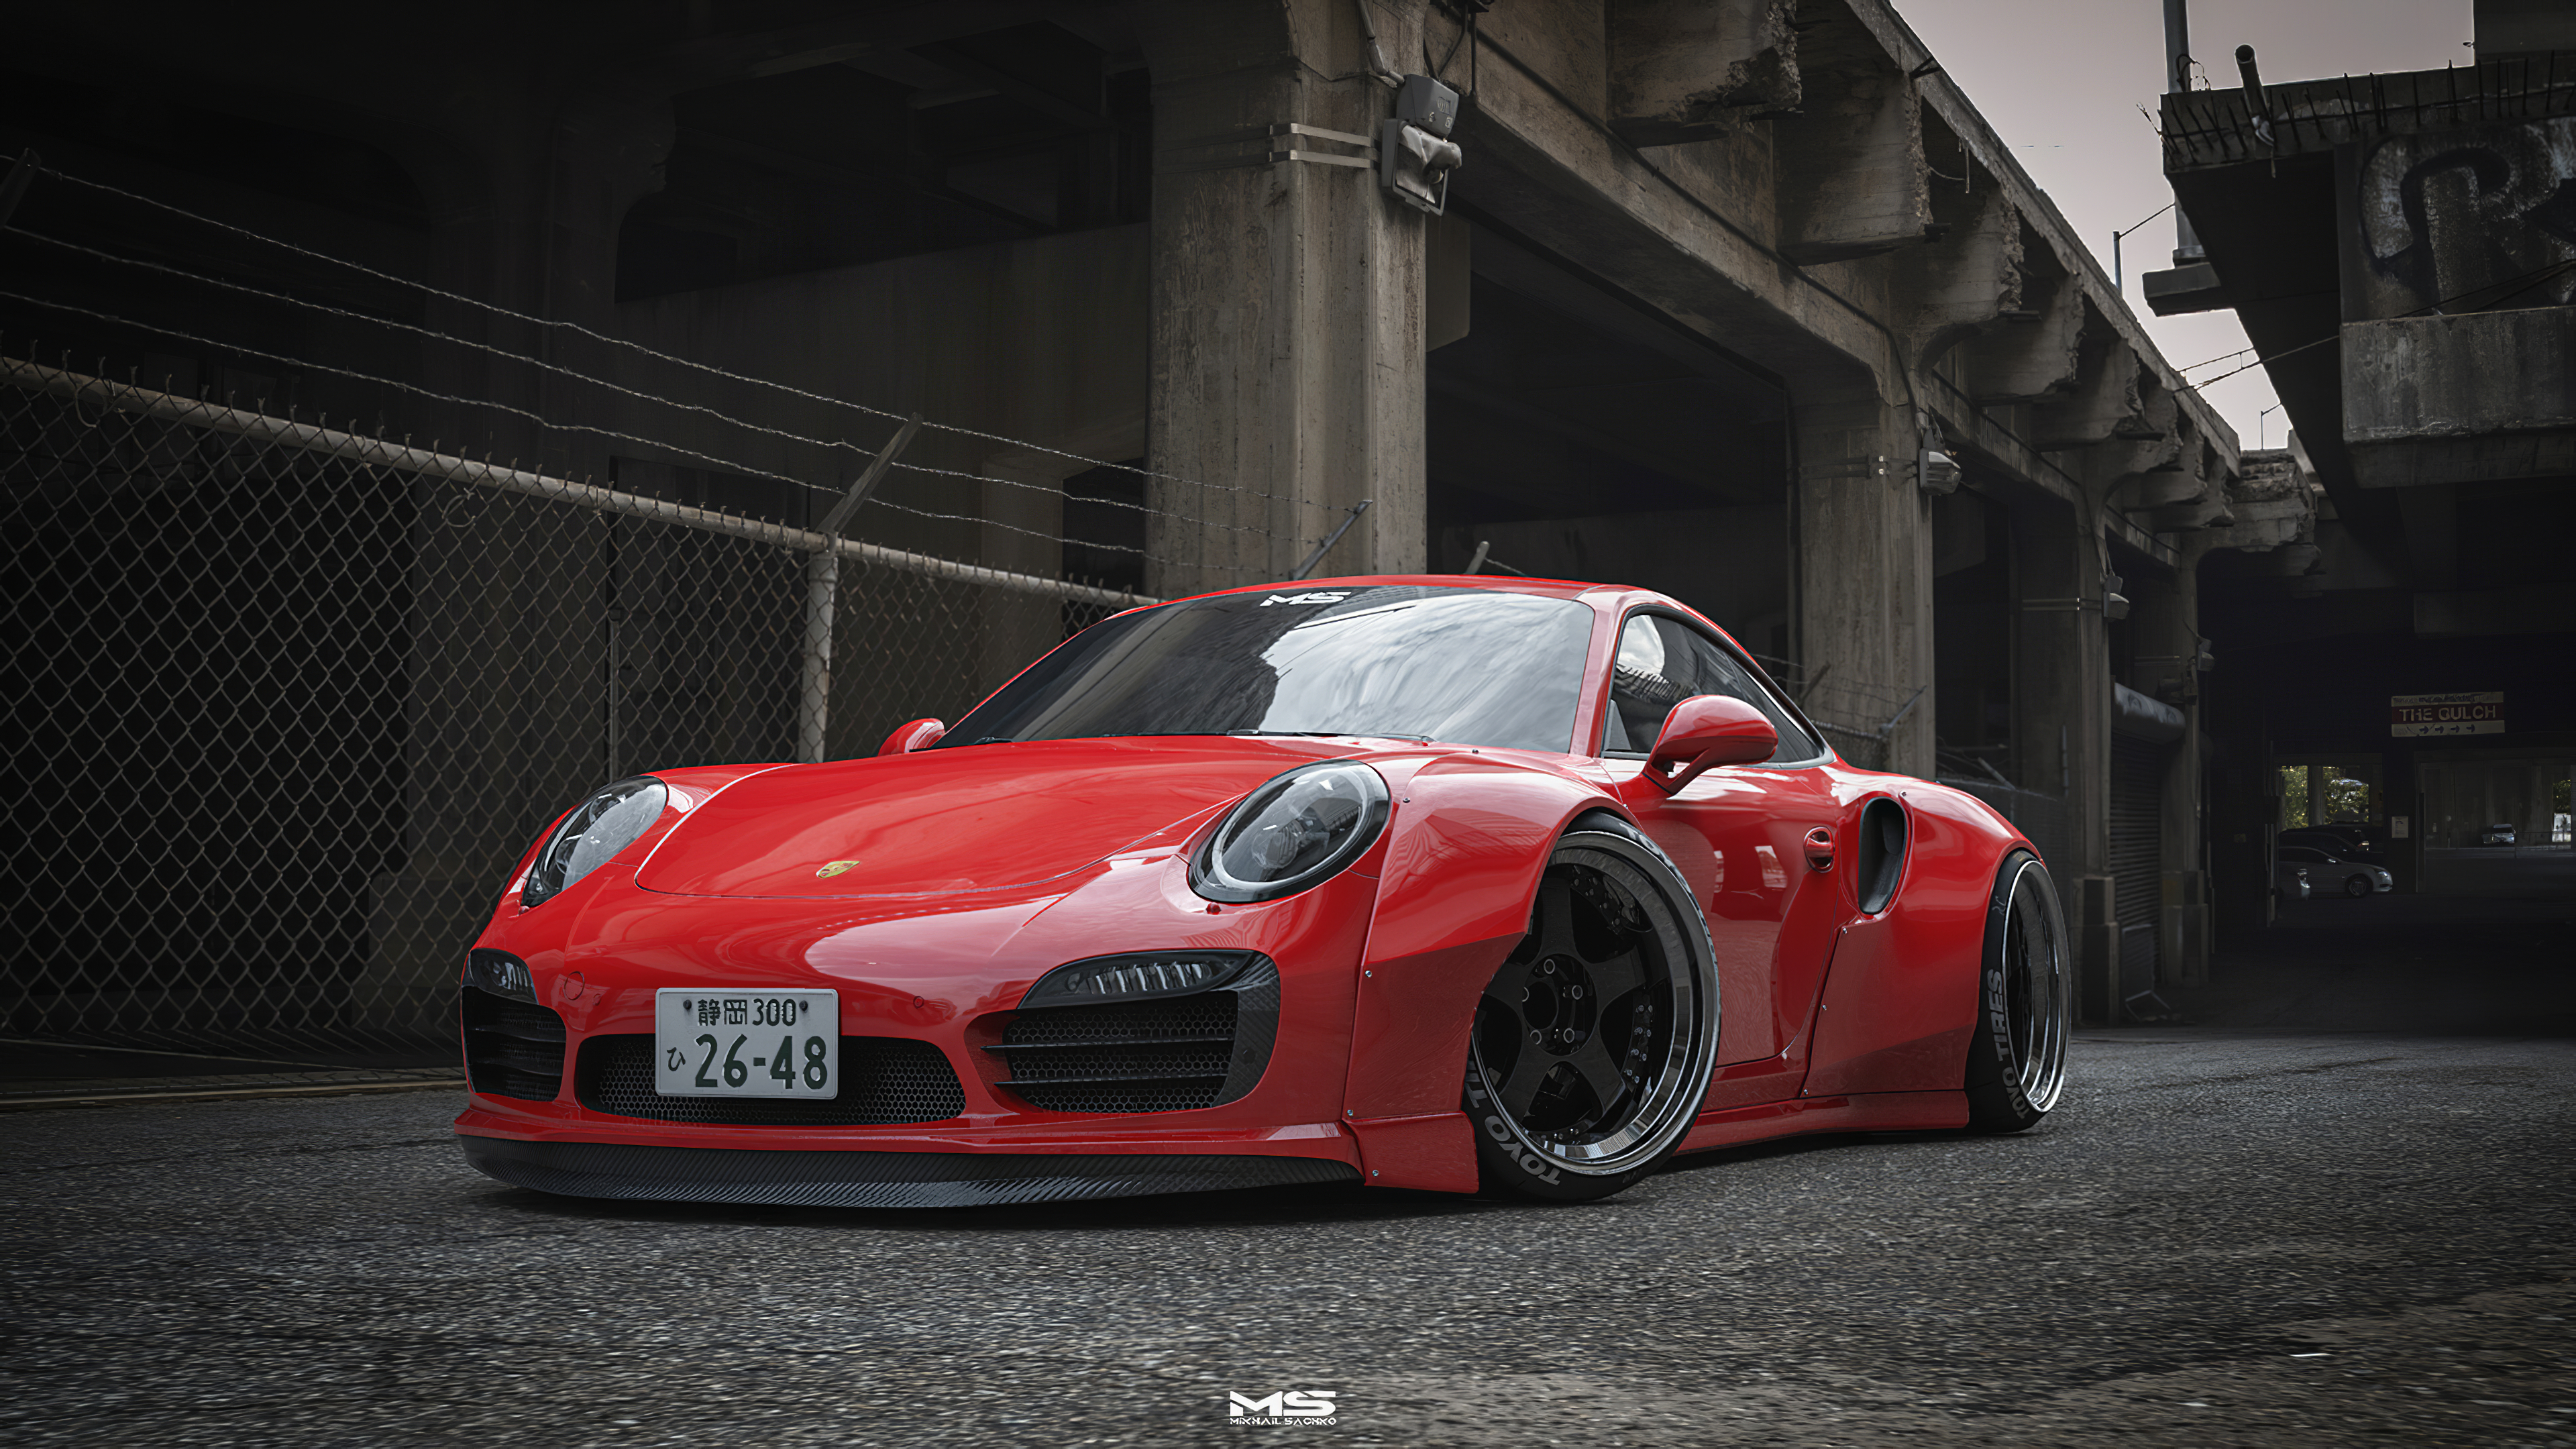 3840x2160 Porsche Car 4k 2020 4k HD 4k Wallpapers, Images ...